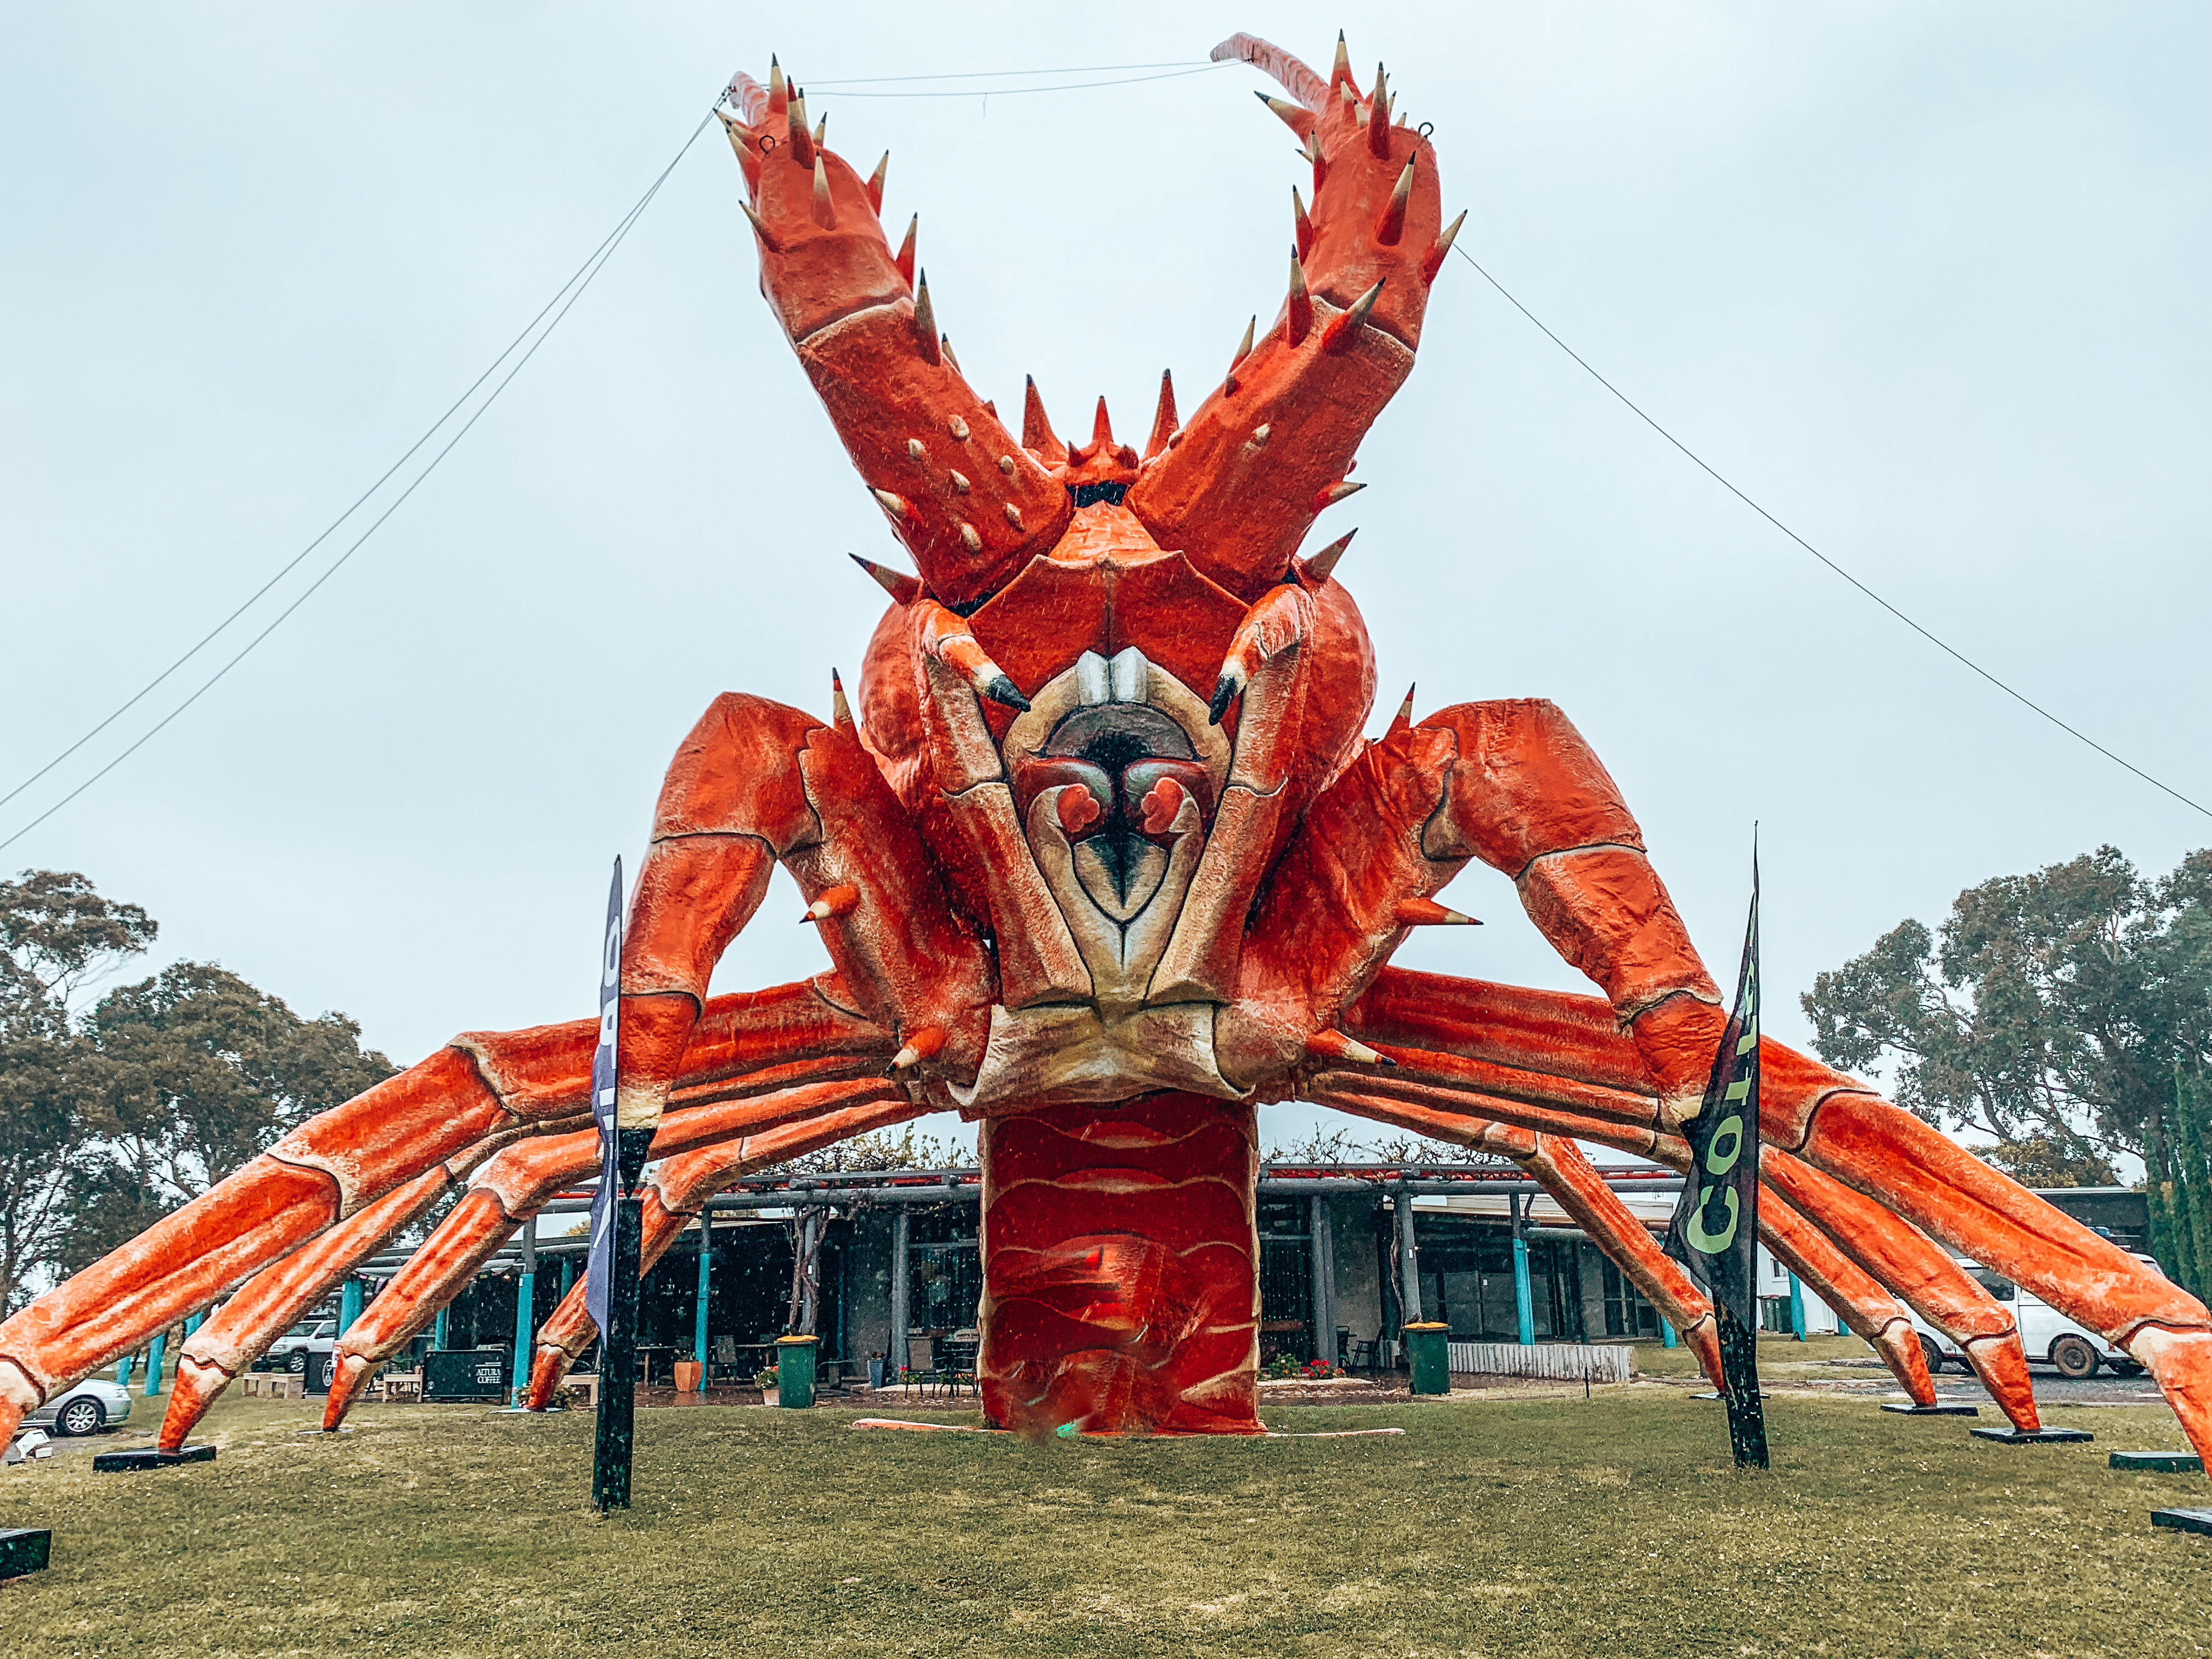 The Big Lobster - Image of giant lobster model